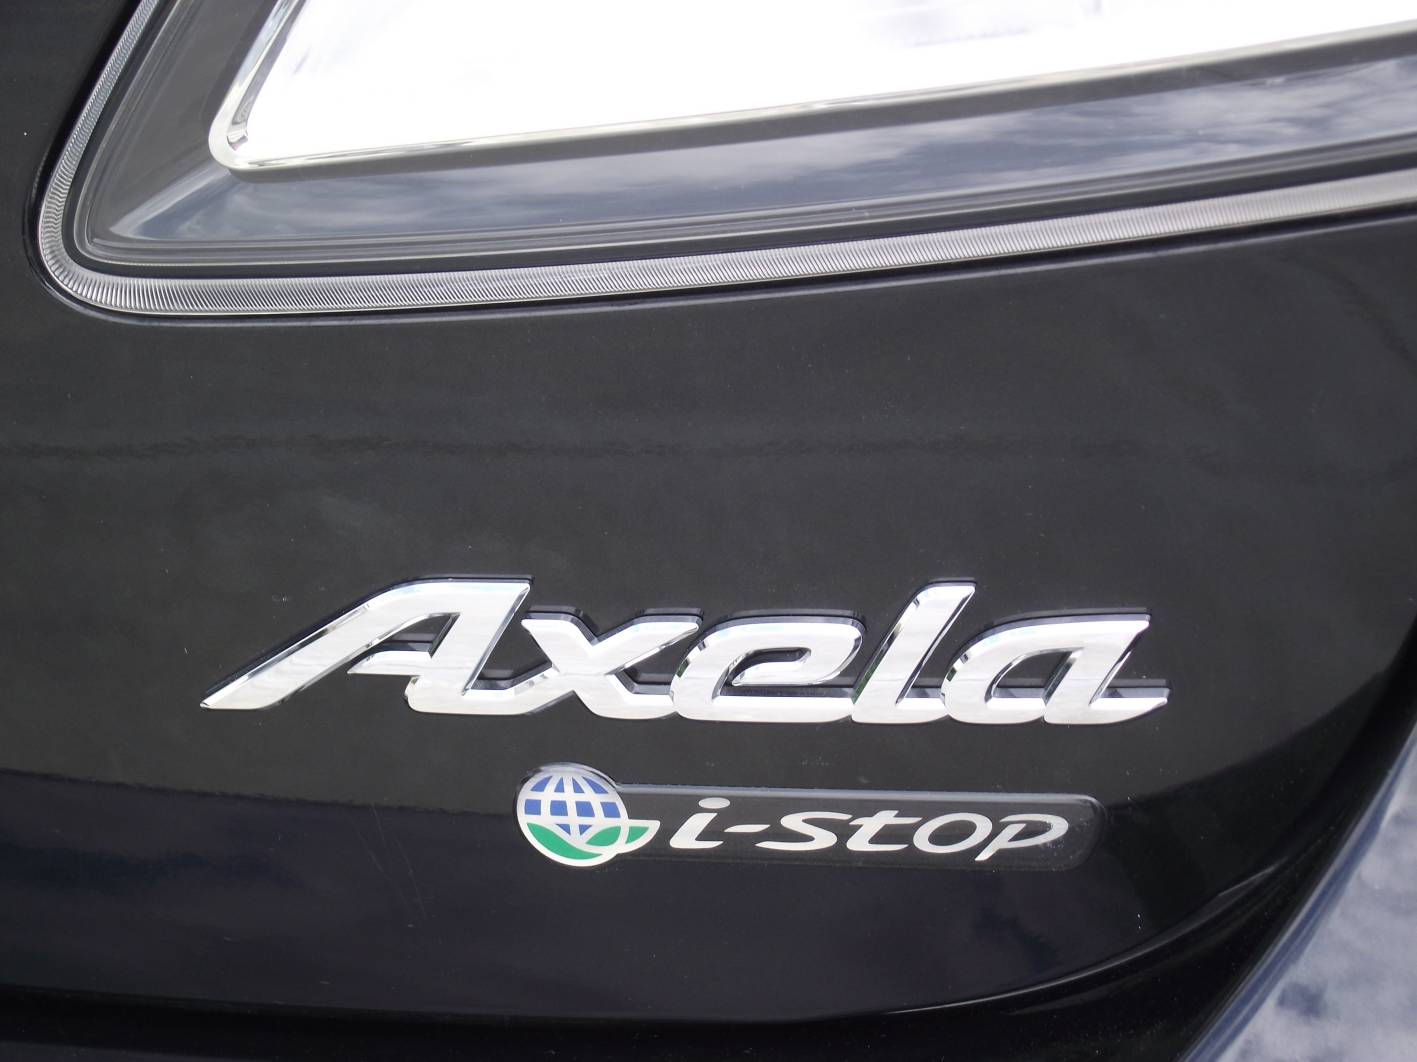 News Mazda Starts Local Testing Of istop